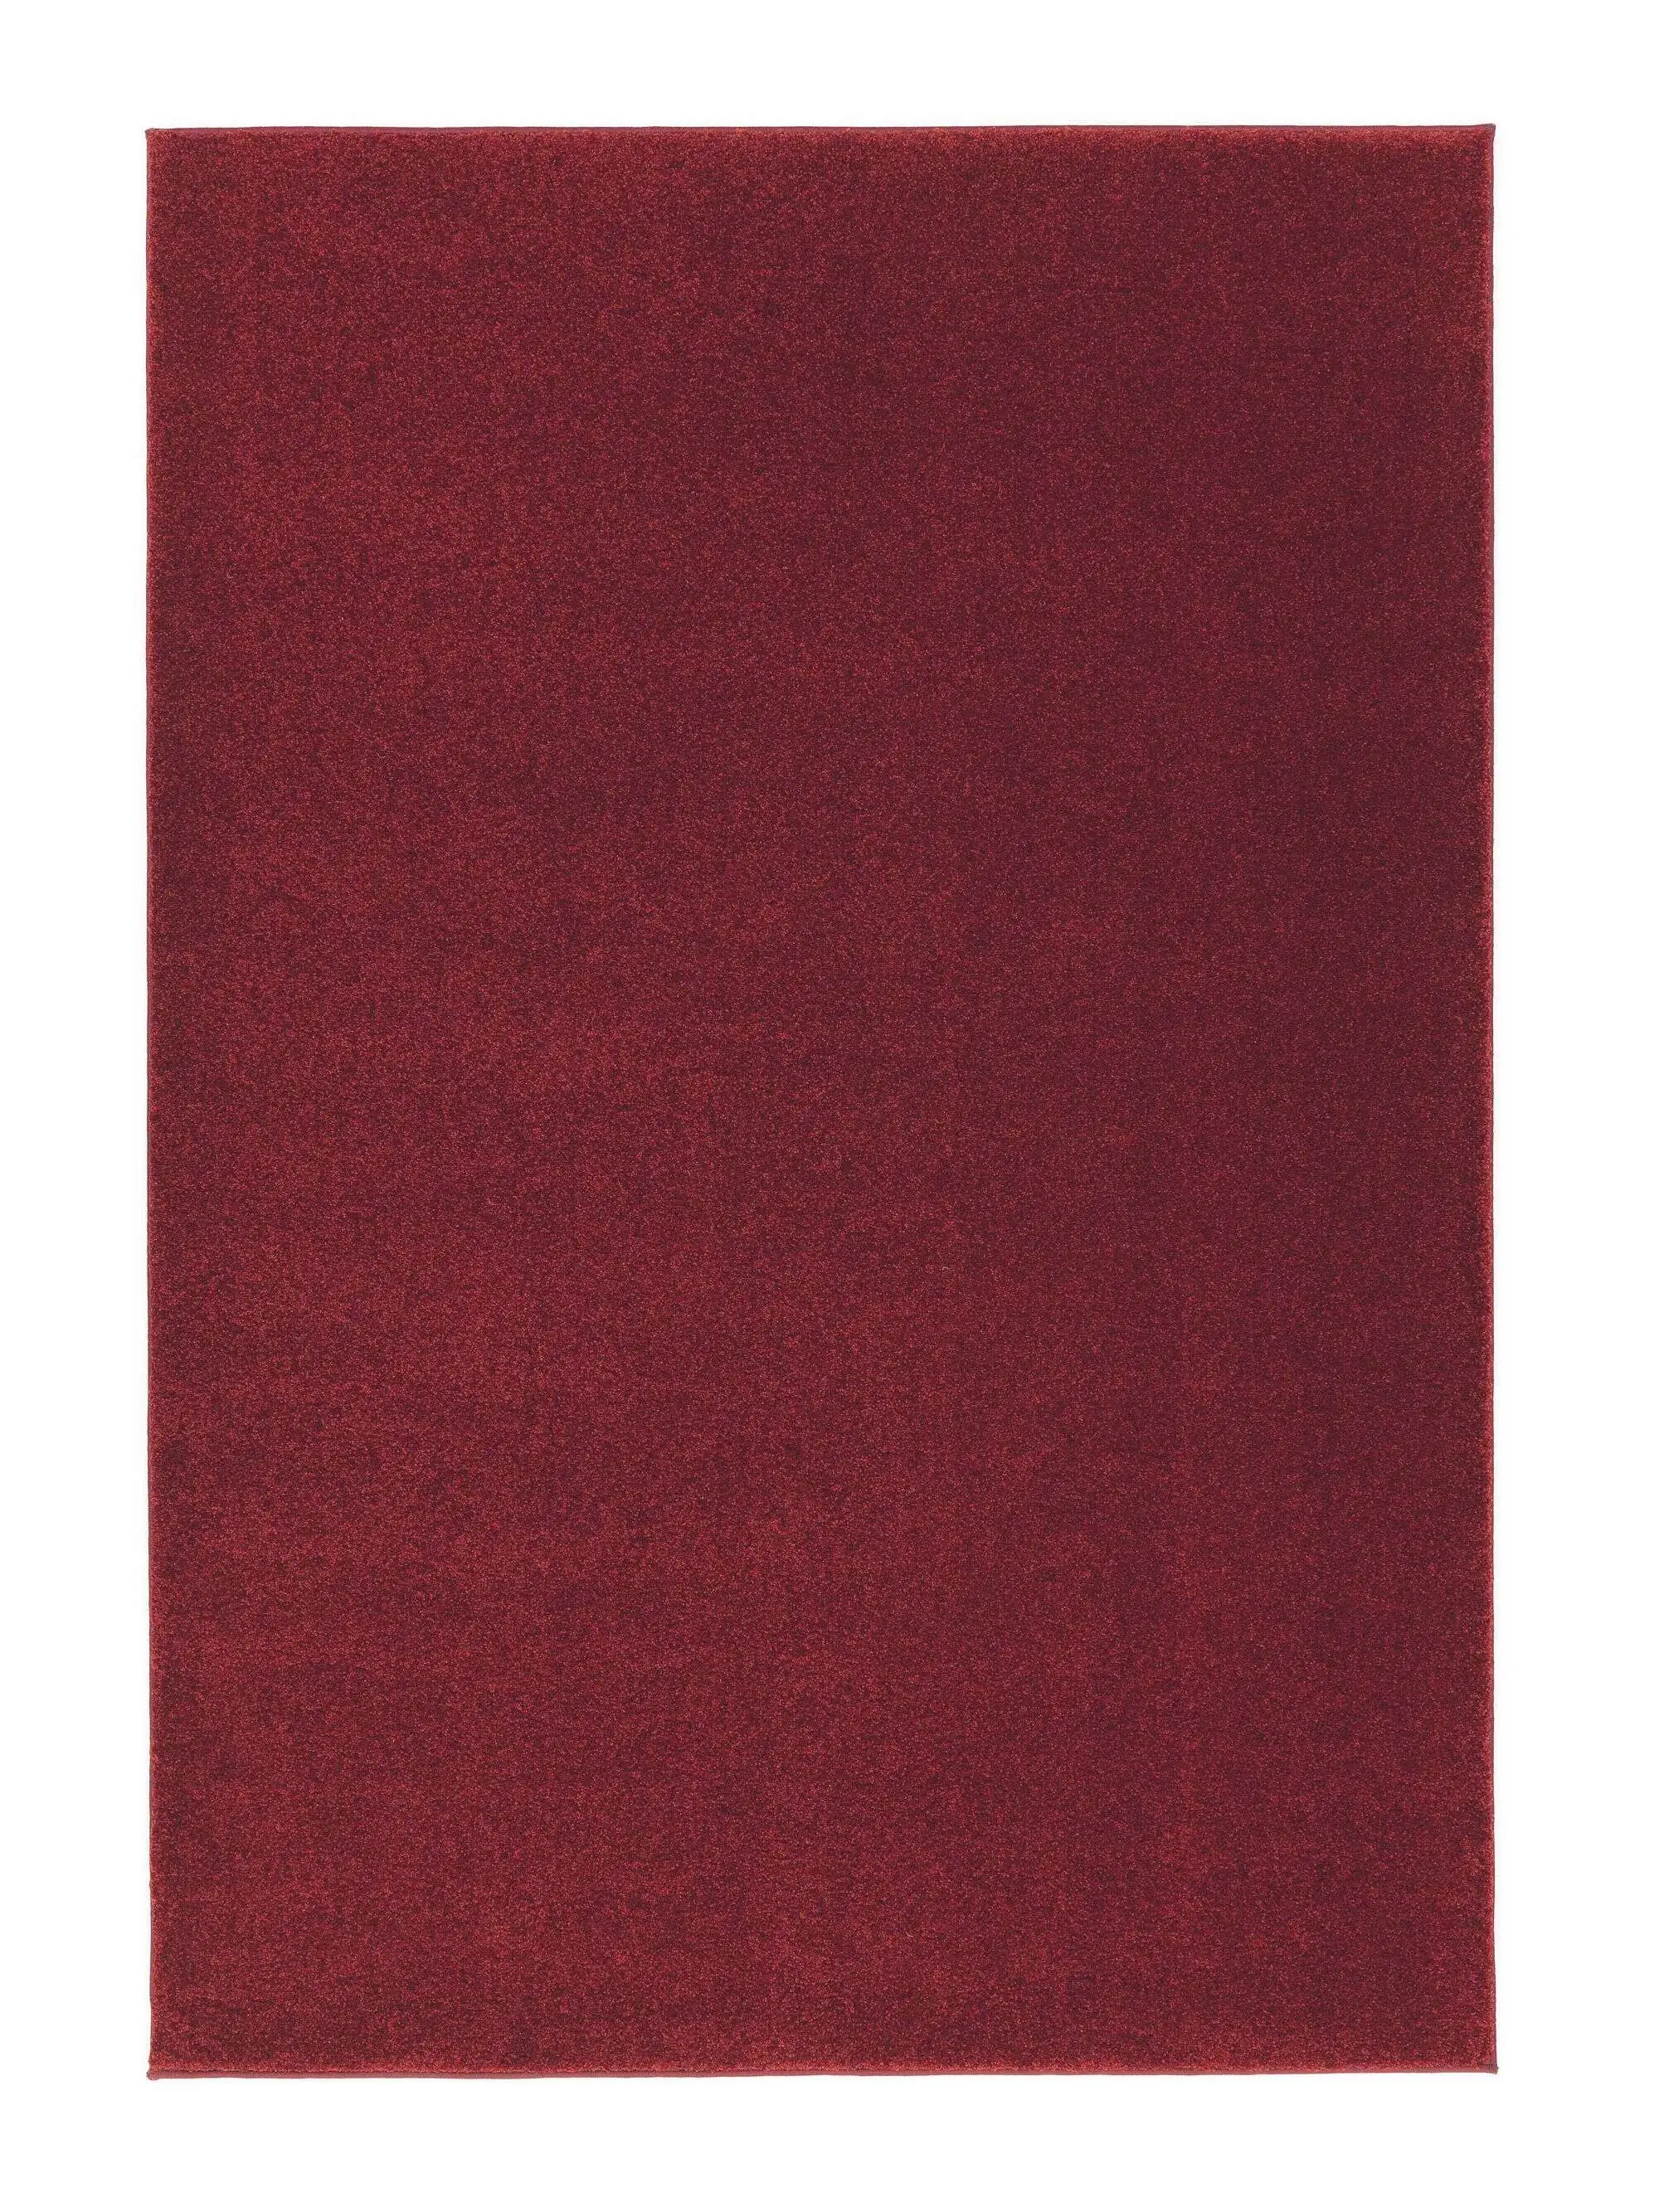 Teppich uni rot Samoa 6870-001-010 im Wunschmaß